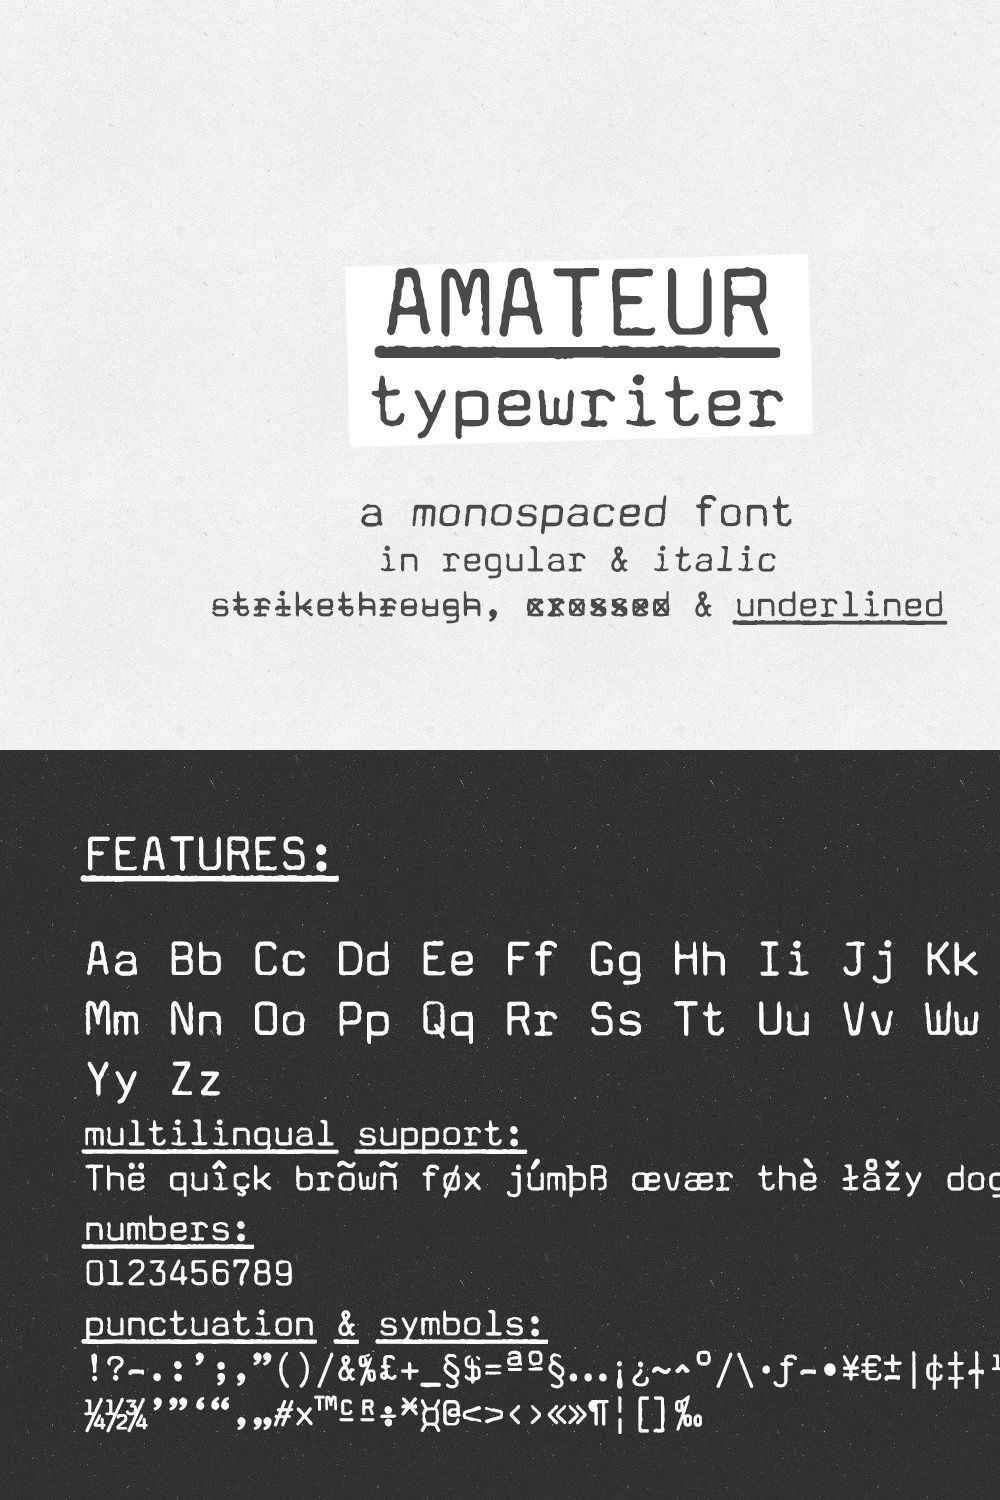 Amateur Typewriter monospaced font pinterest preview image.